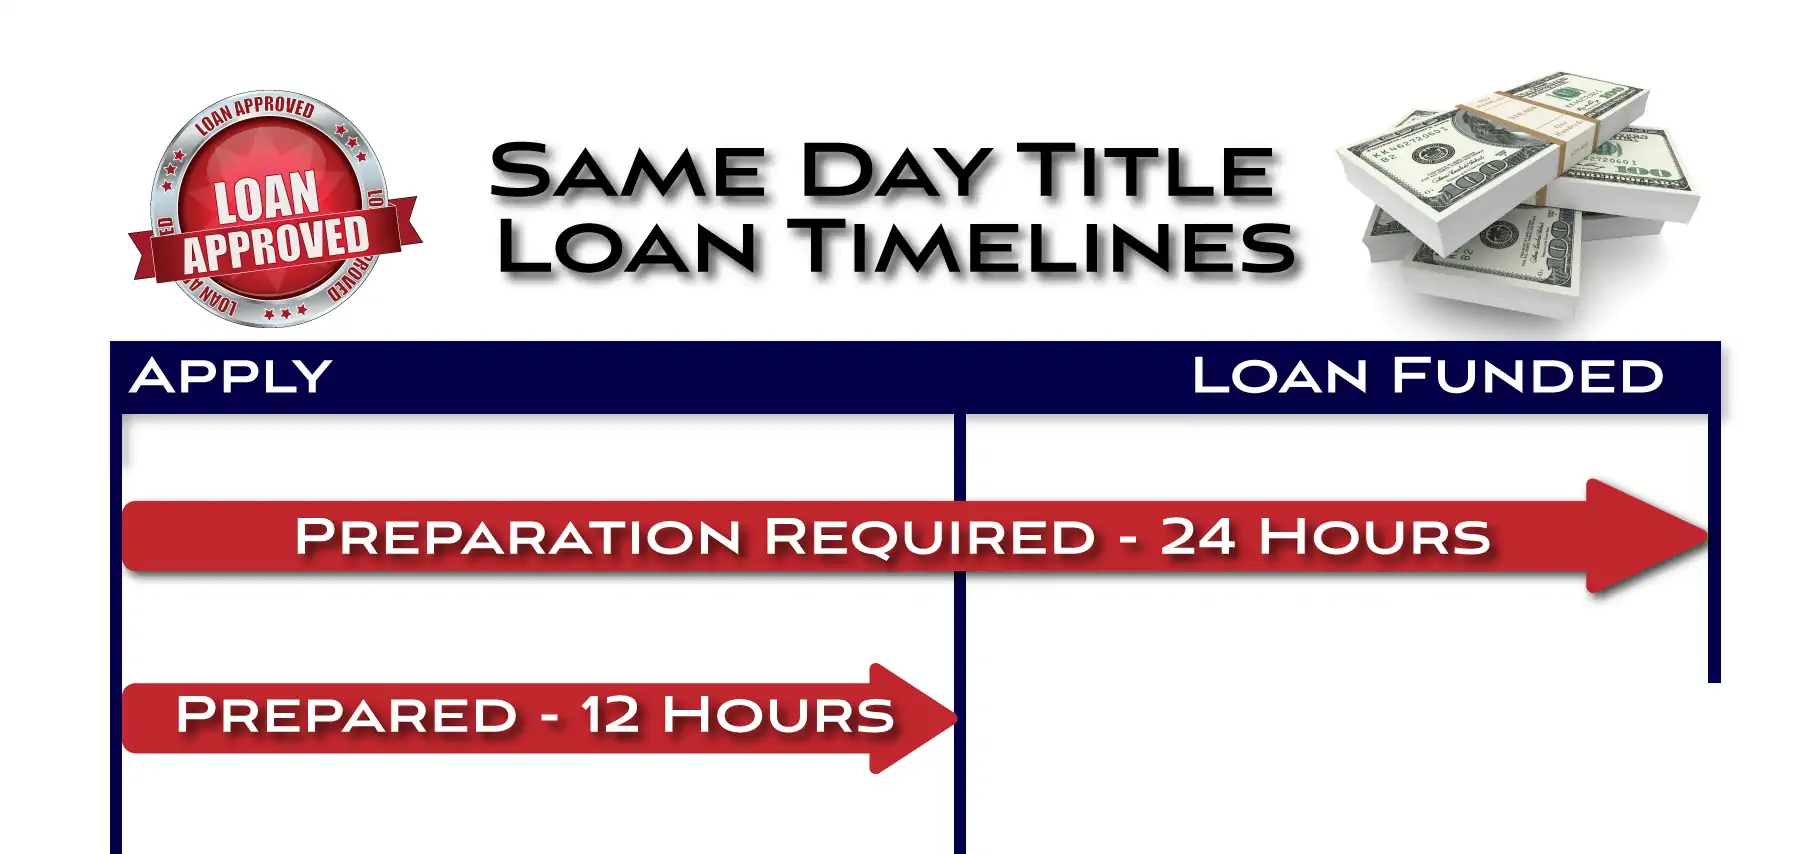 Same Day Title Loan Times